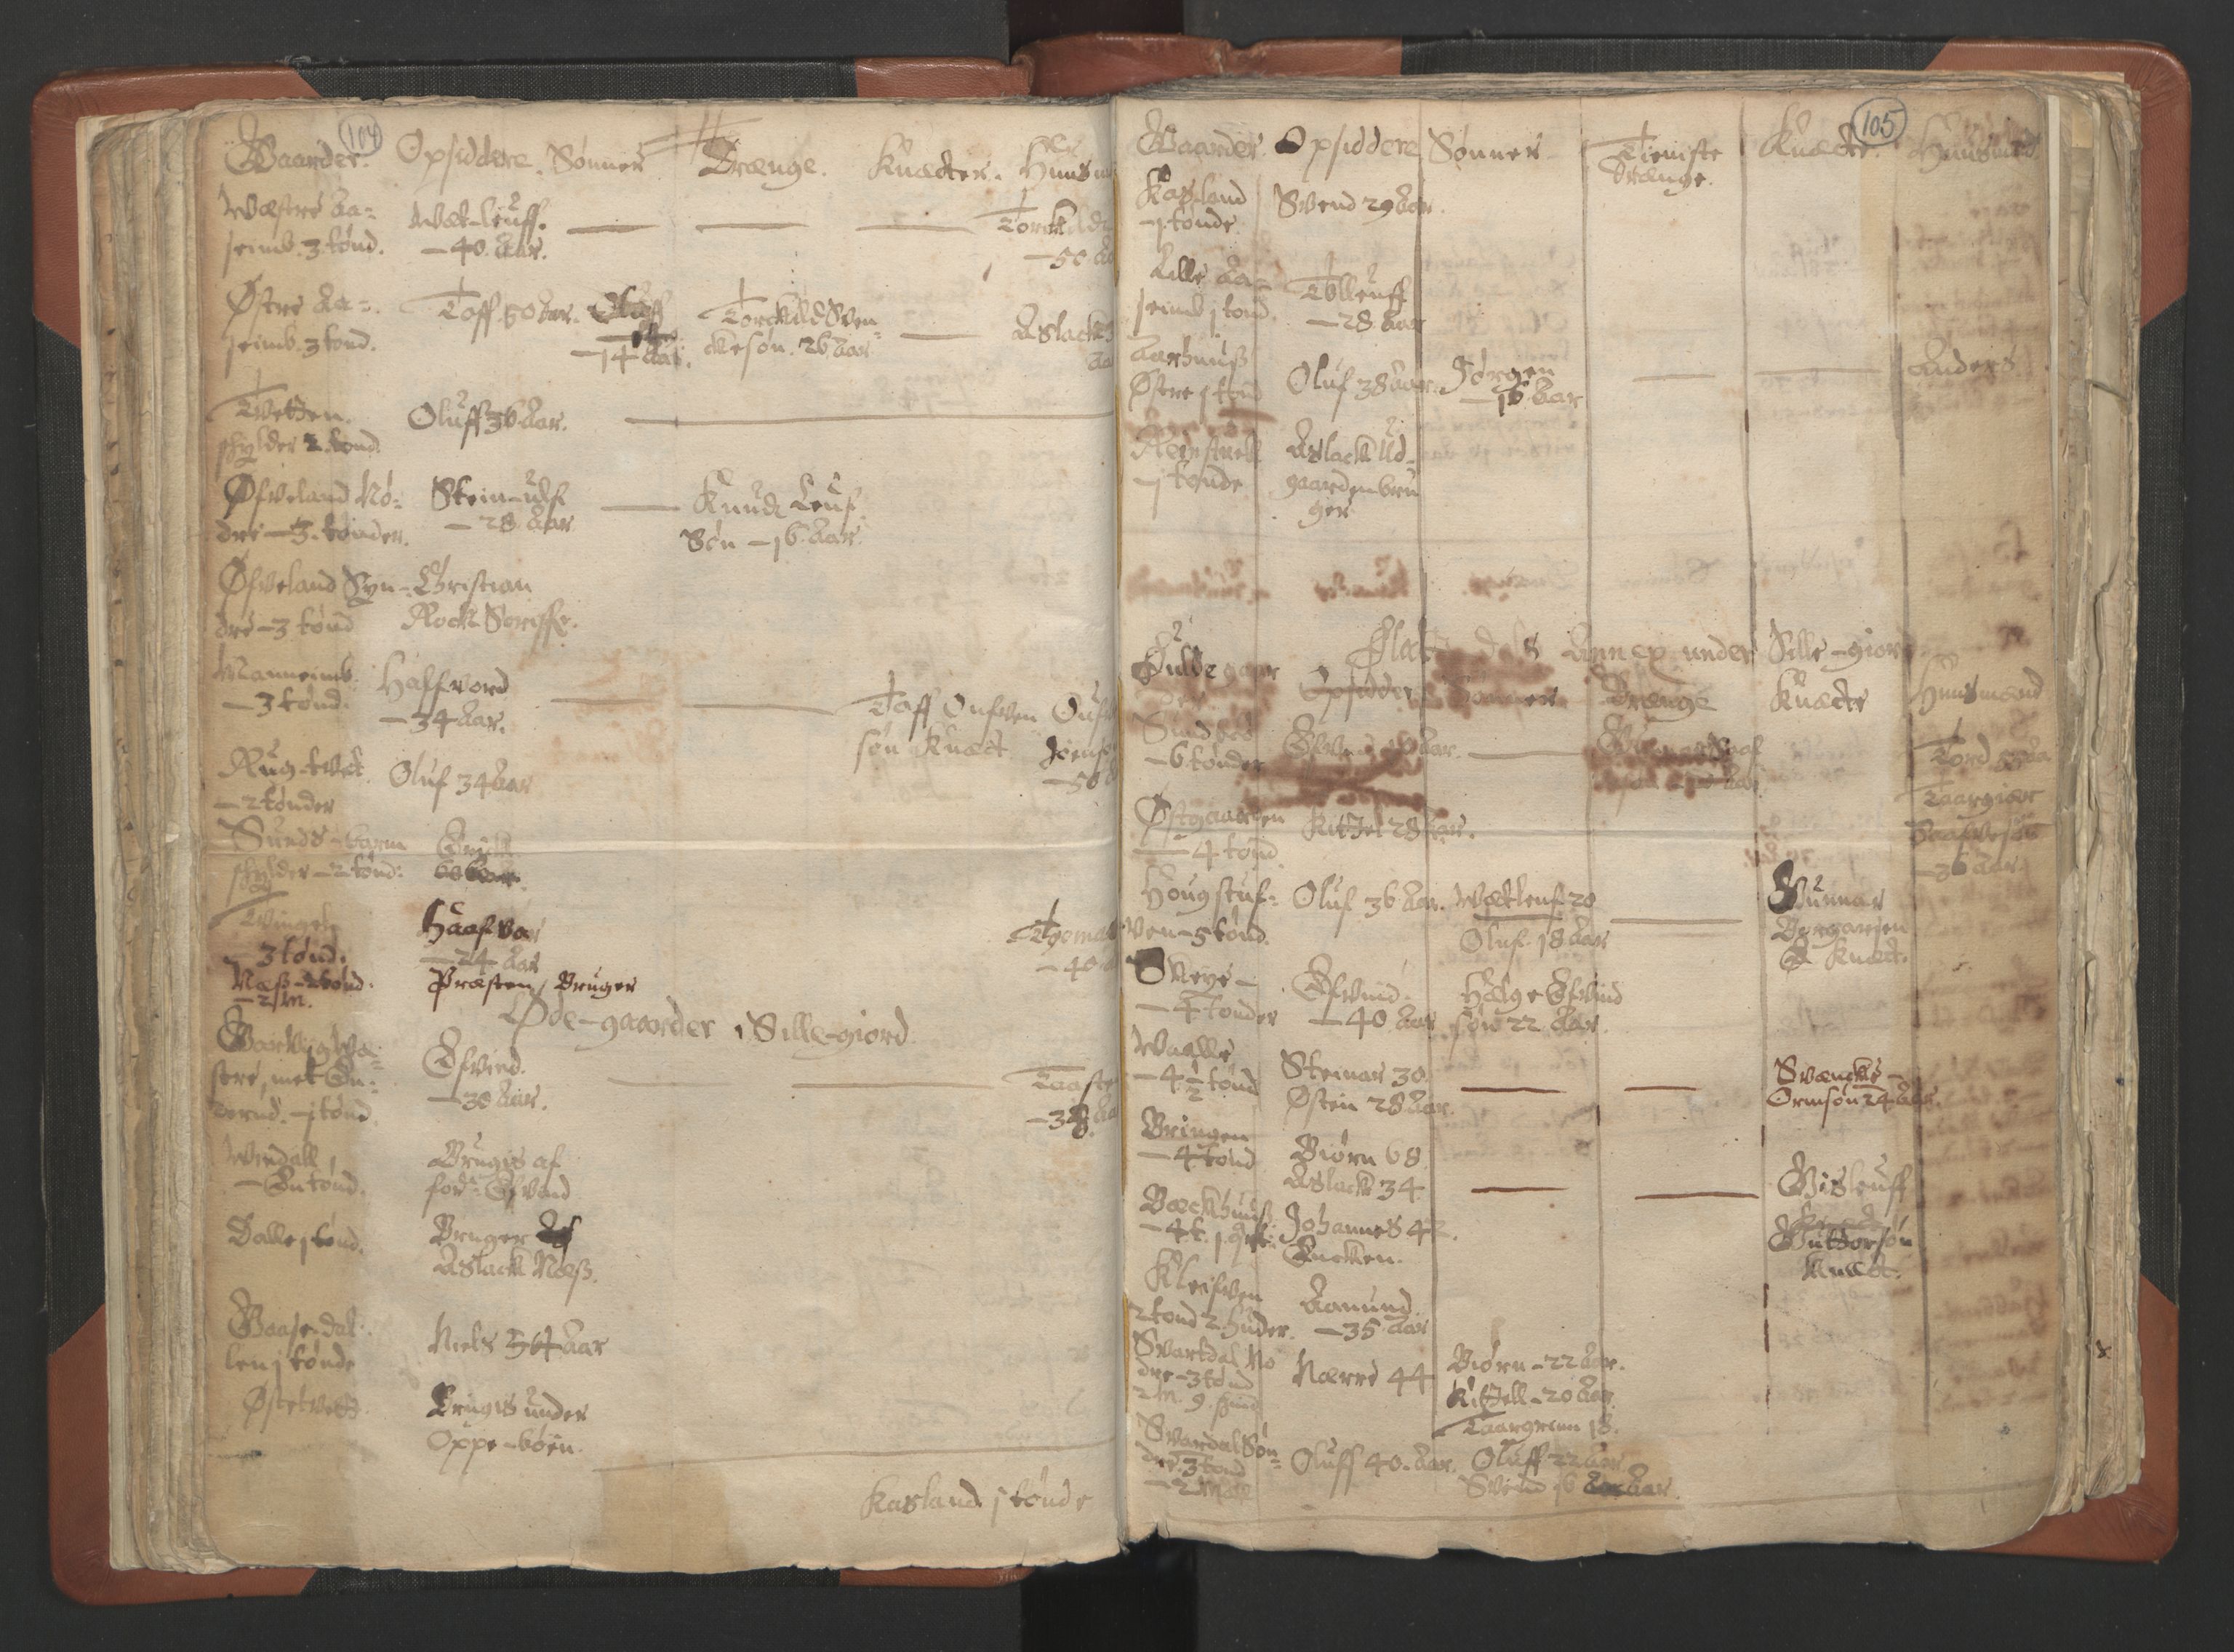 RA, Vicar's Census 1664-1666, no. 12: Øvre Telemark deanery, Nedre Telemark deanery and Bamble deanery, 1664-1666, p. 104-105